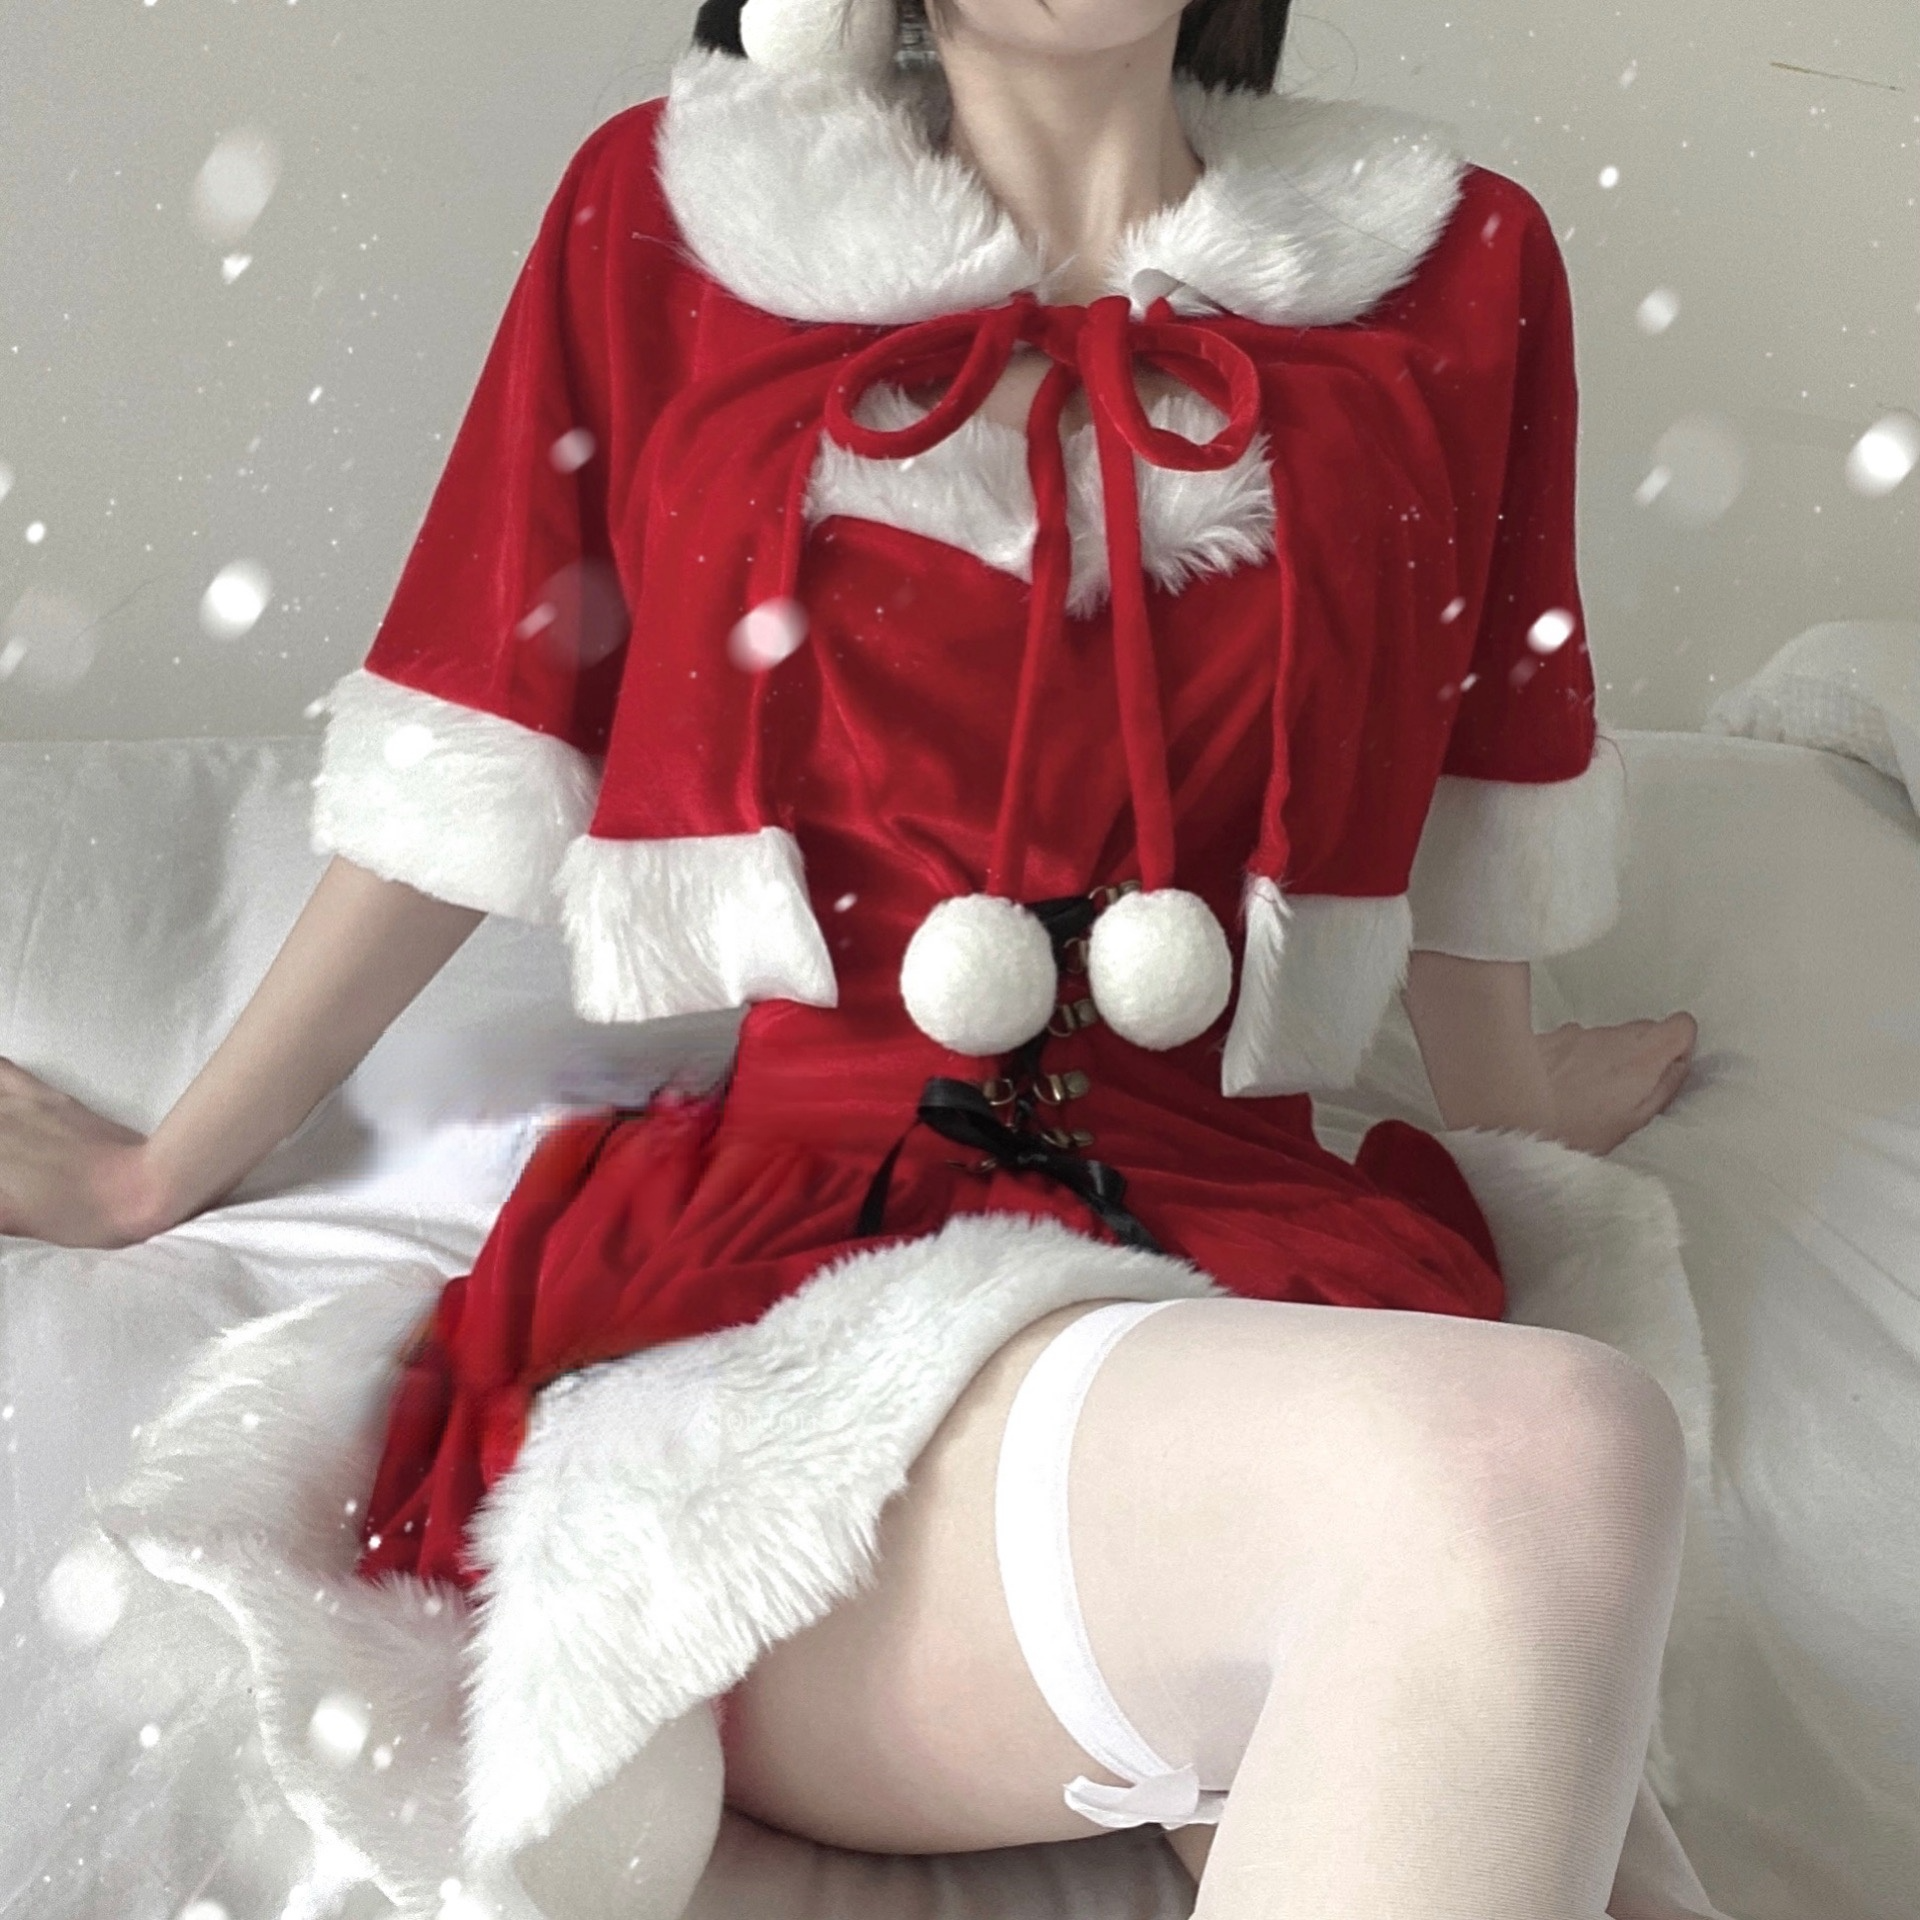 M-XL Kawaii Red Christmas Santa Dress and Cape MK16883